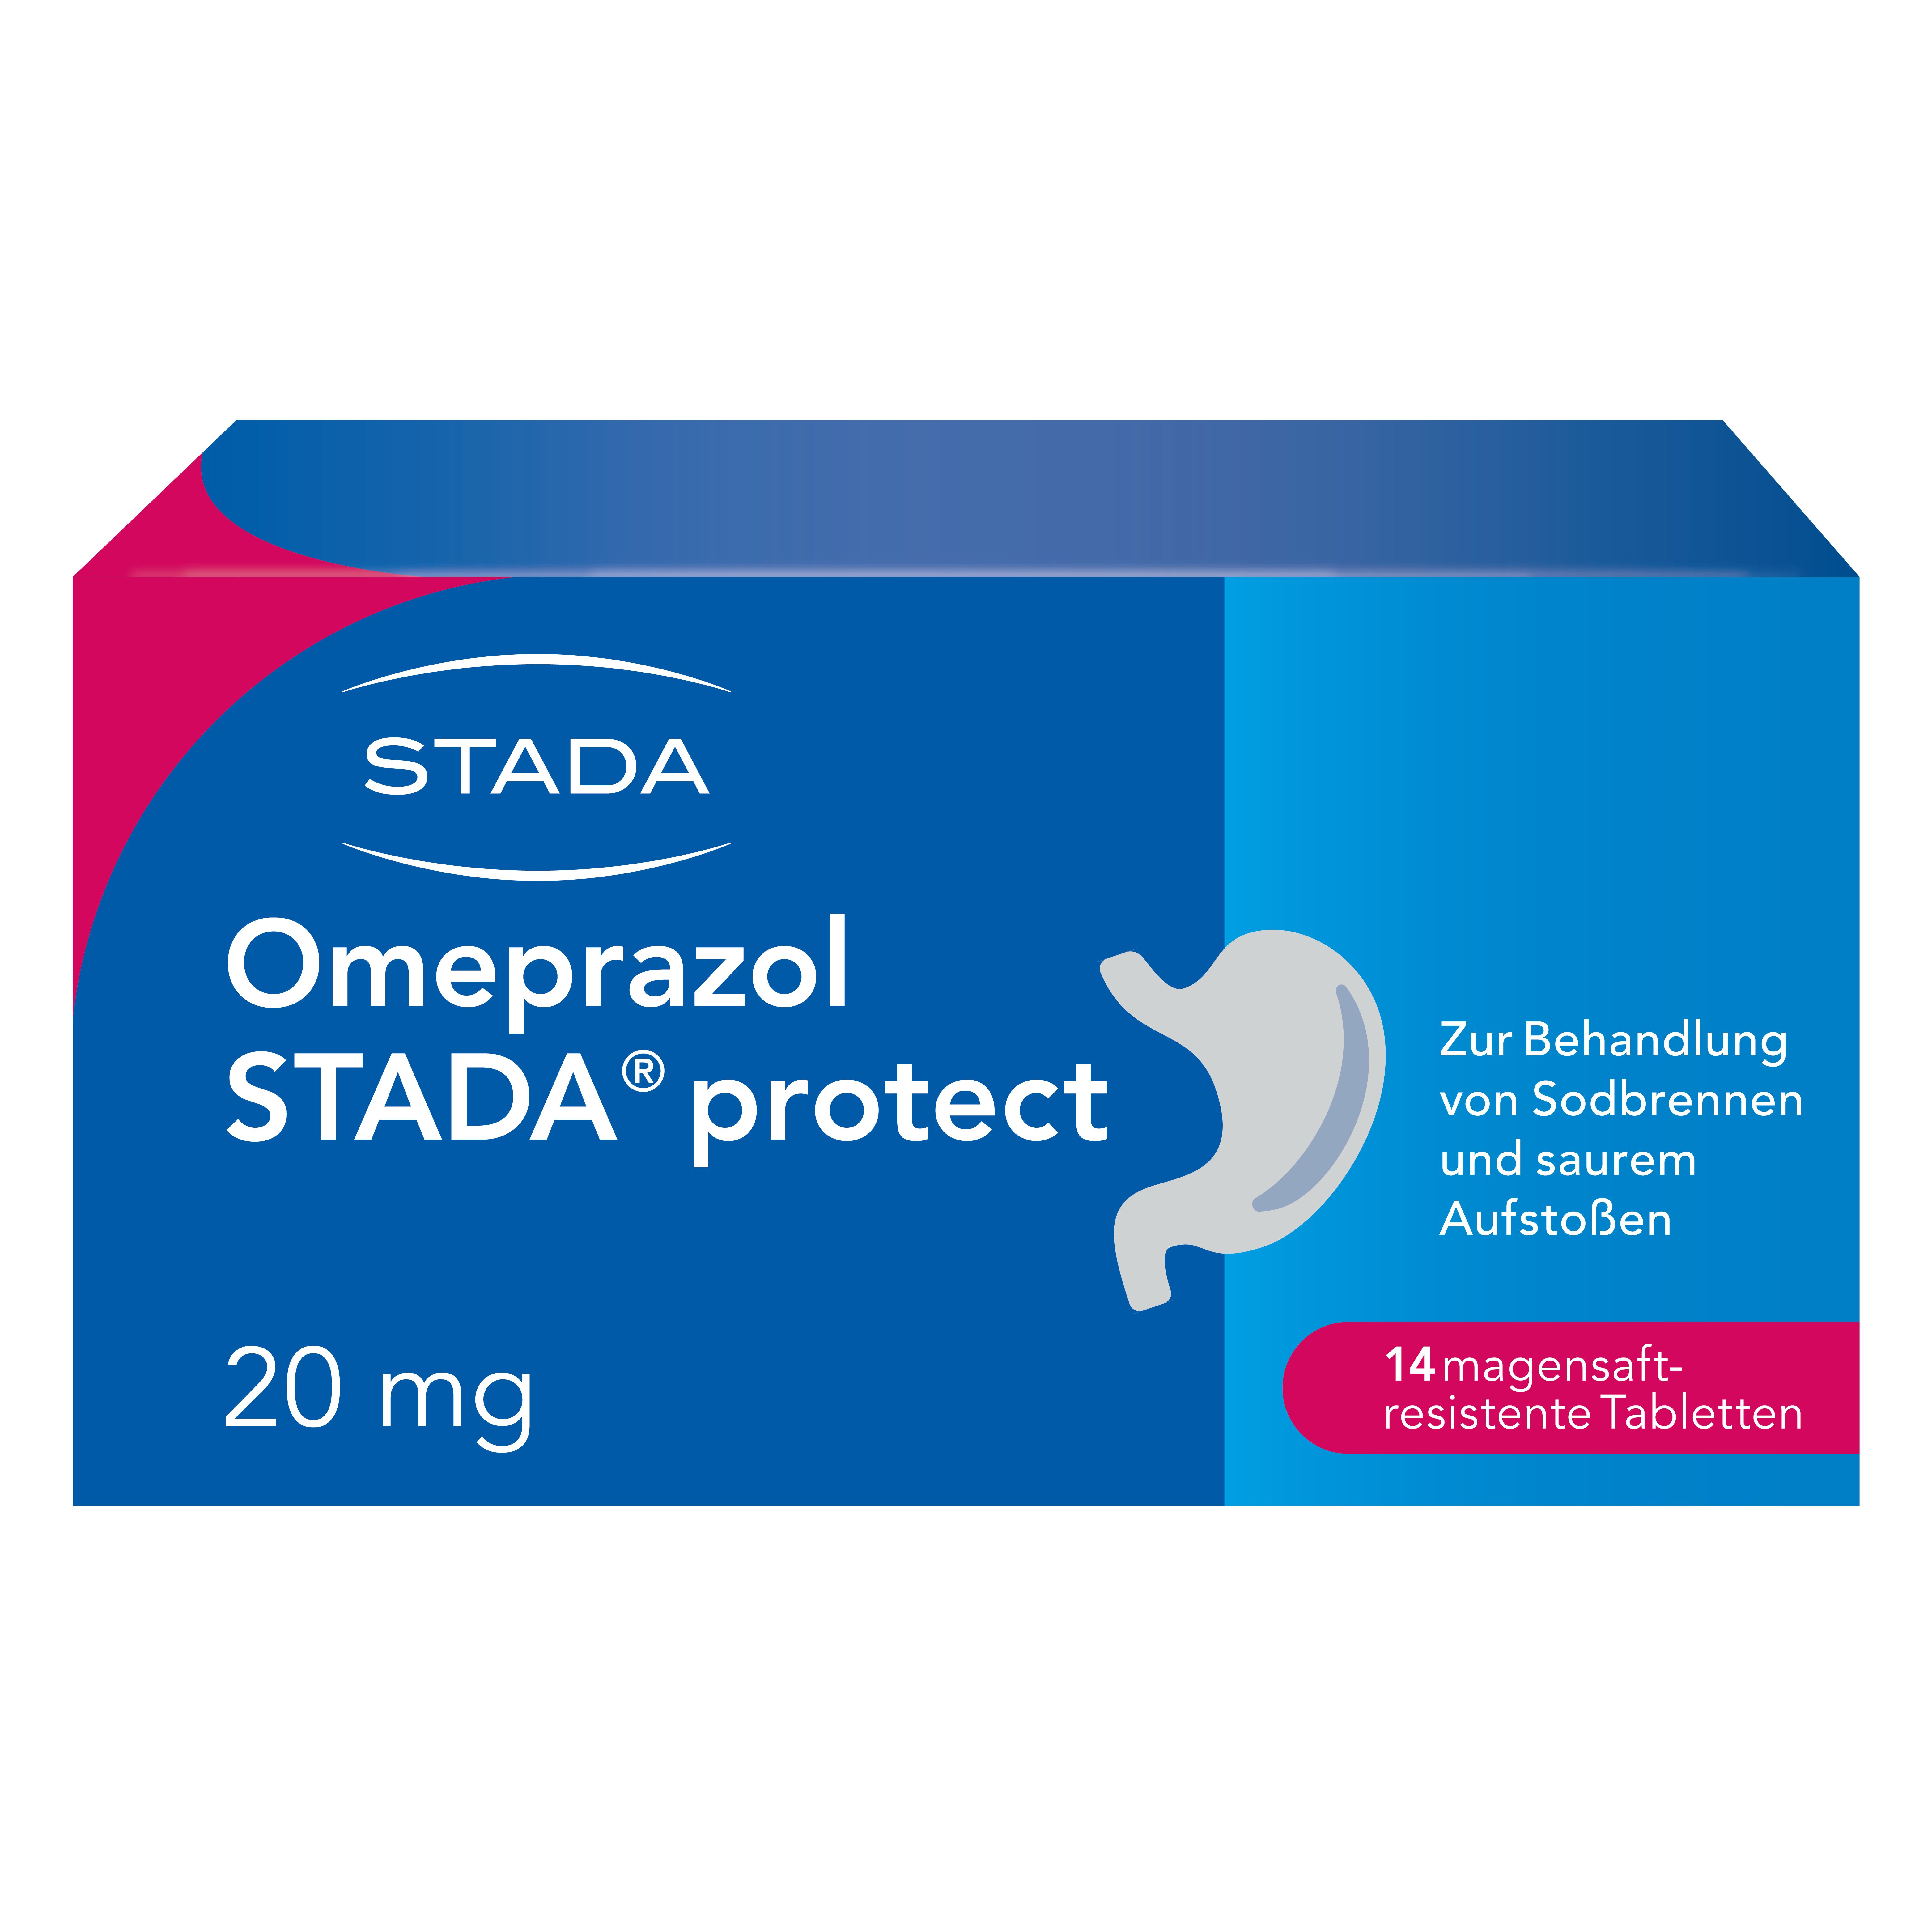 Omeprazol STADA® protect 20 mg